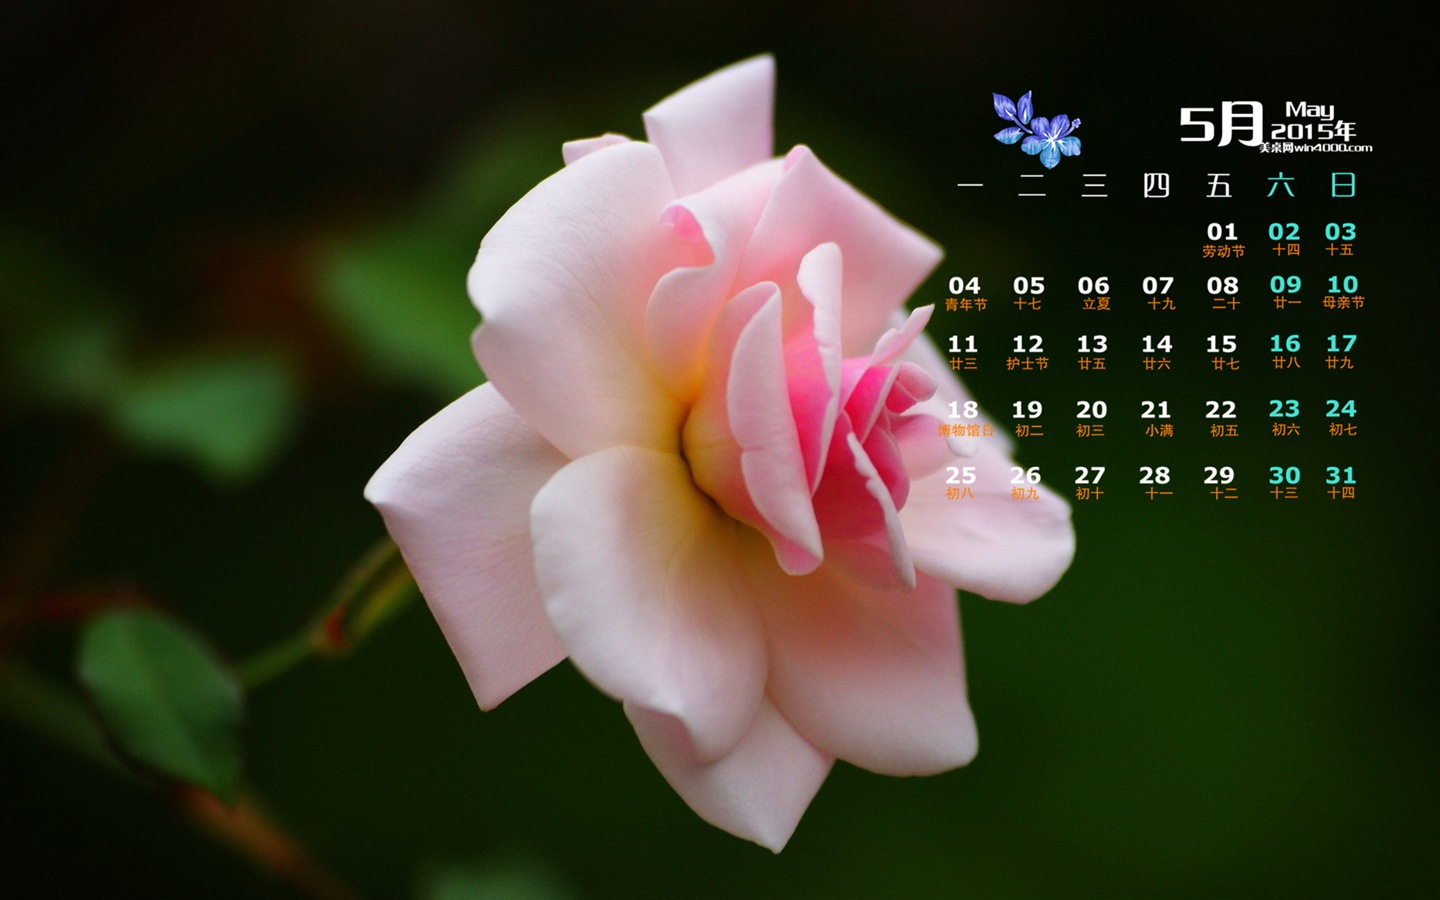 Mai 2015 calendar fond d'écran (1) #18 - 1440x900